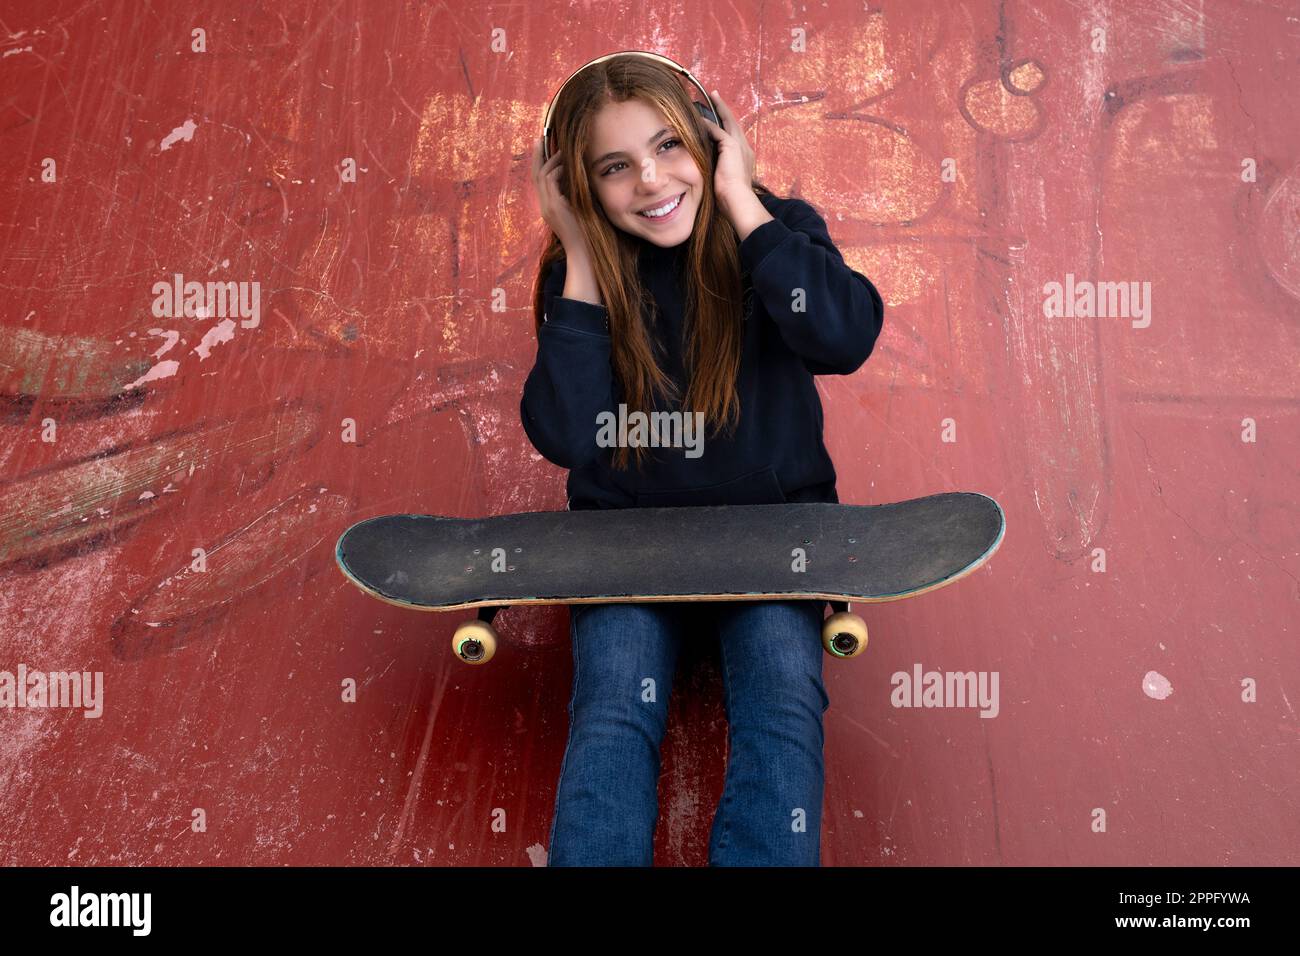 girl listening music with skateboard Stock Photo - Alamy